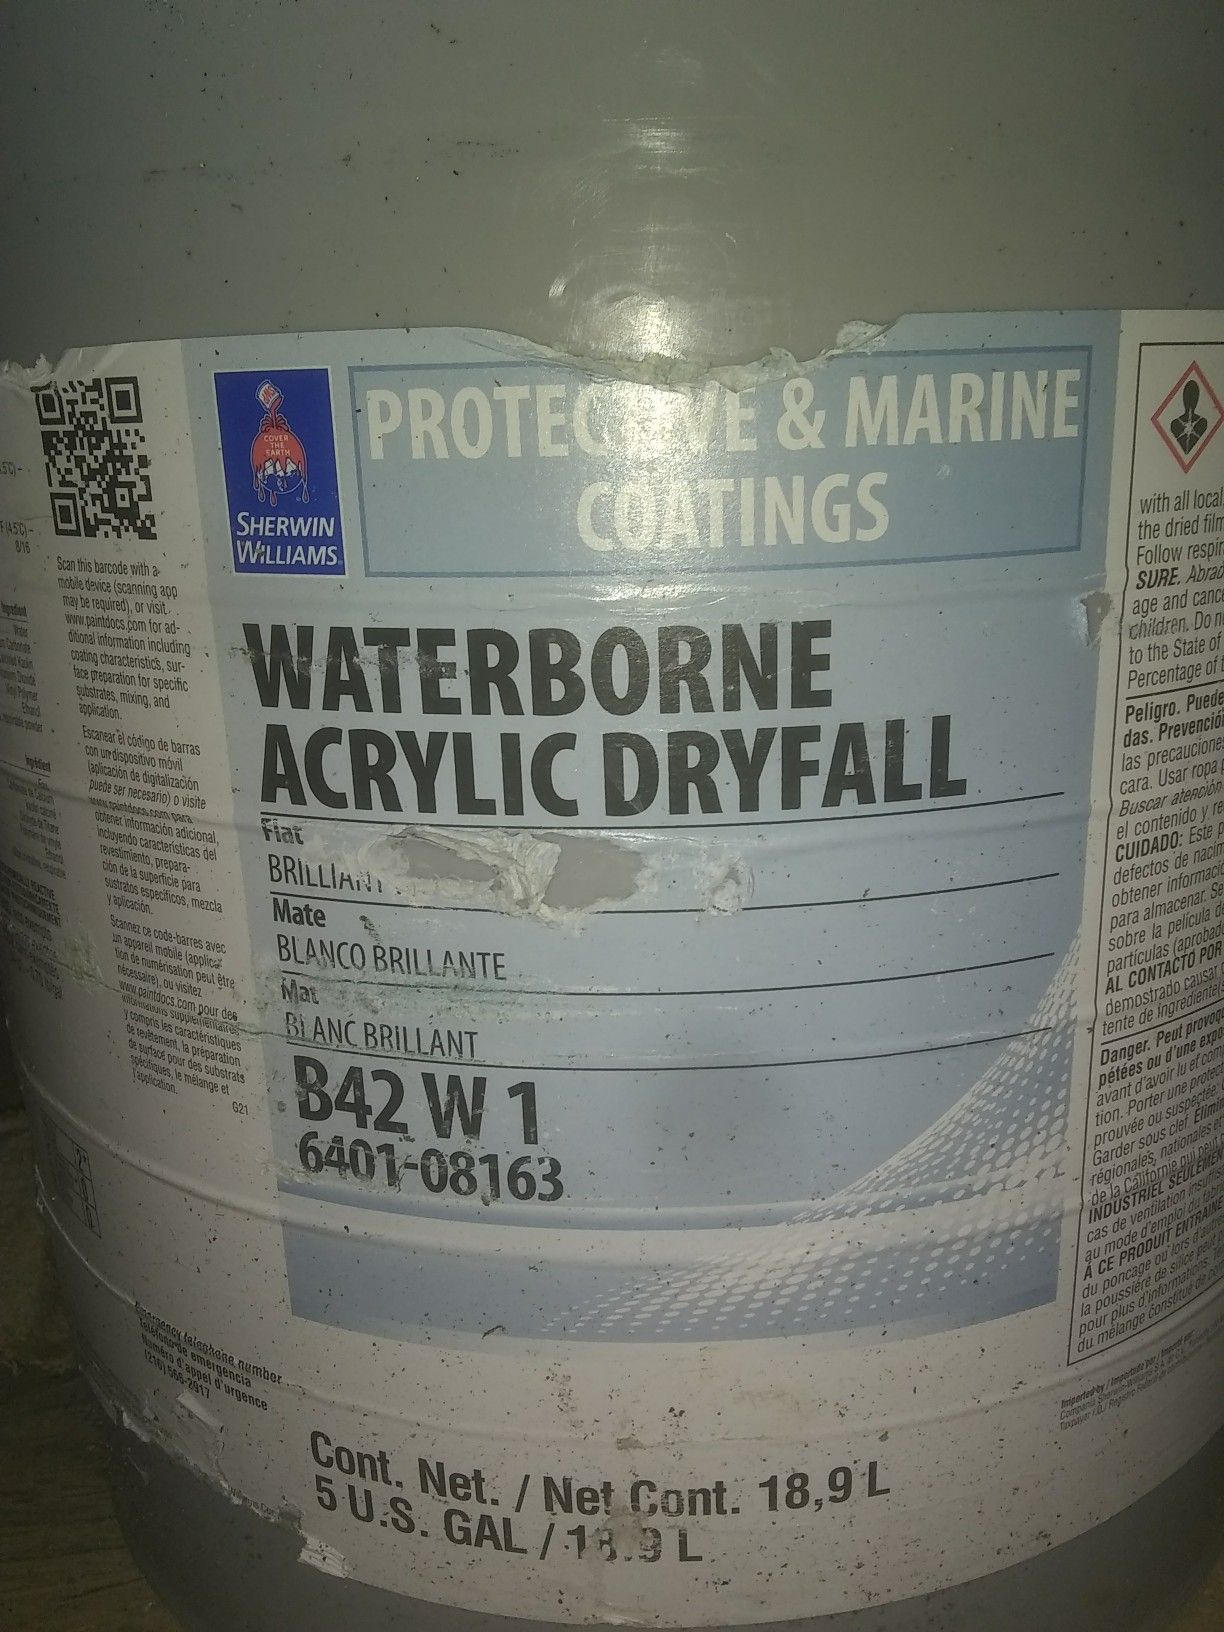 Waterbourne acrylic dryfall